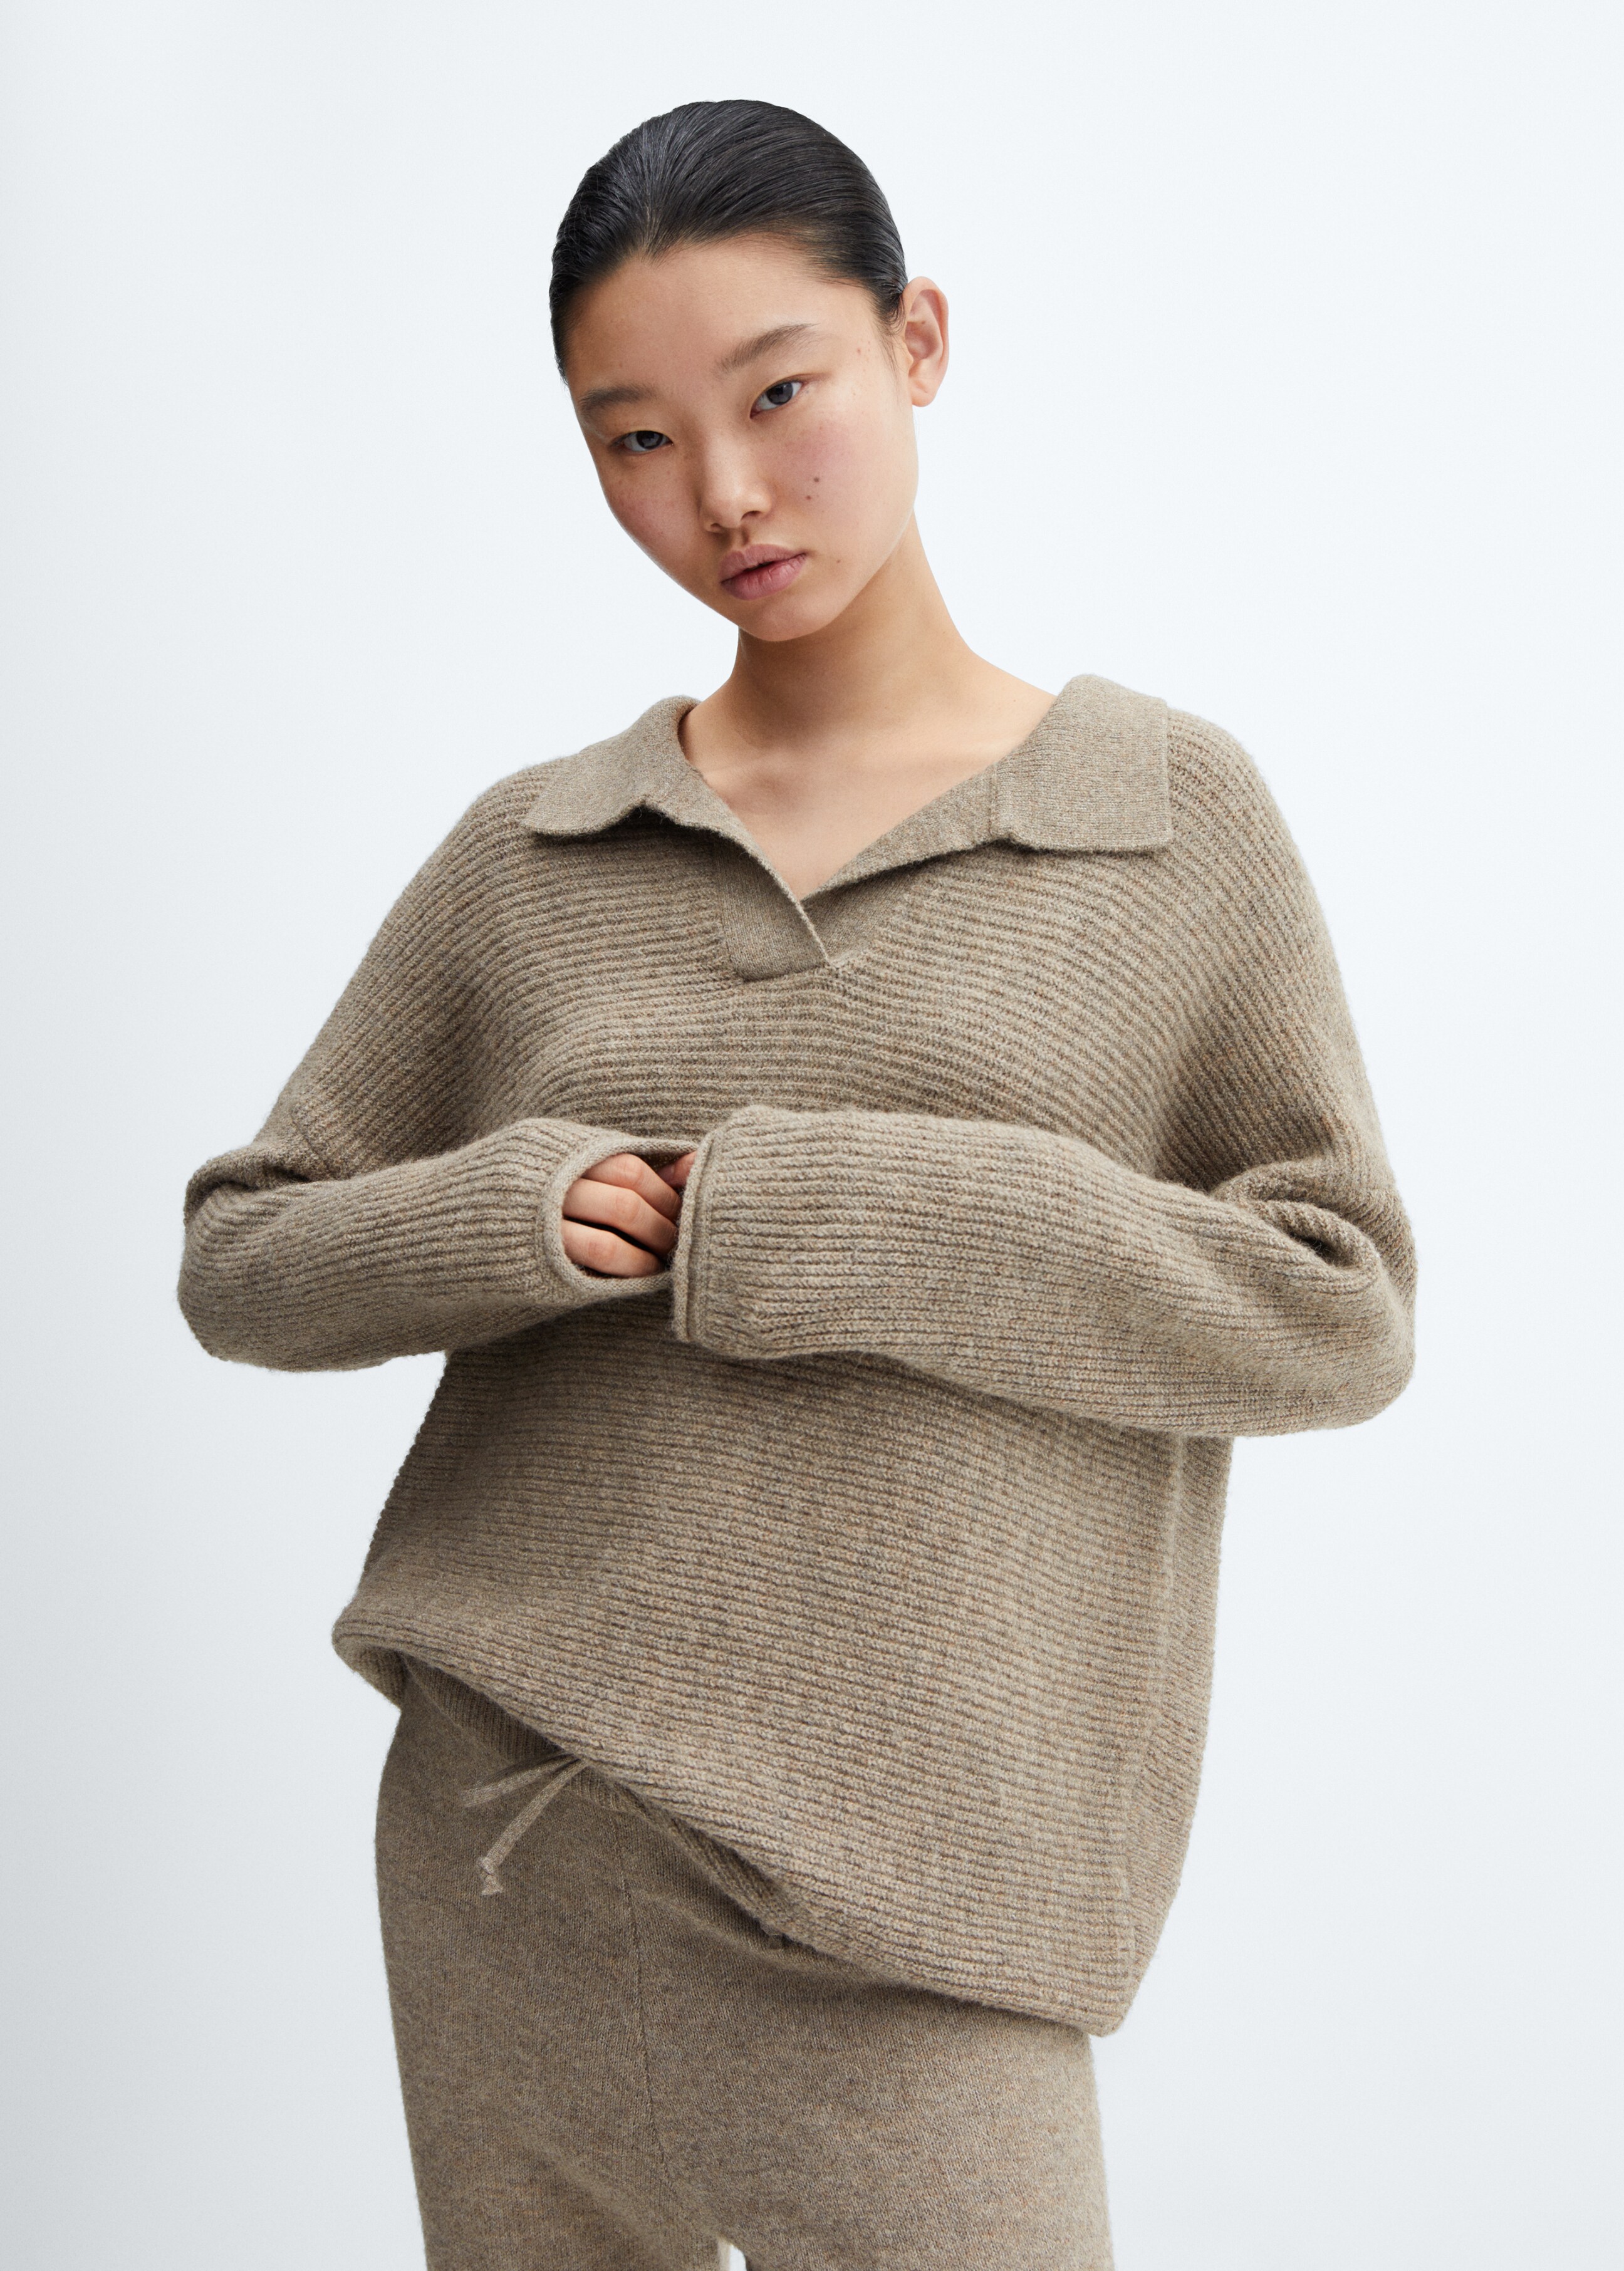 Oversized knit sweater - Medium plane